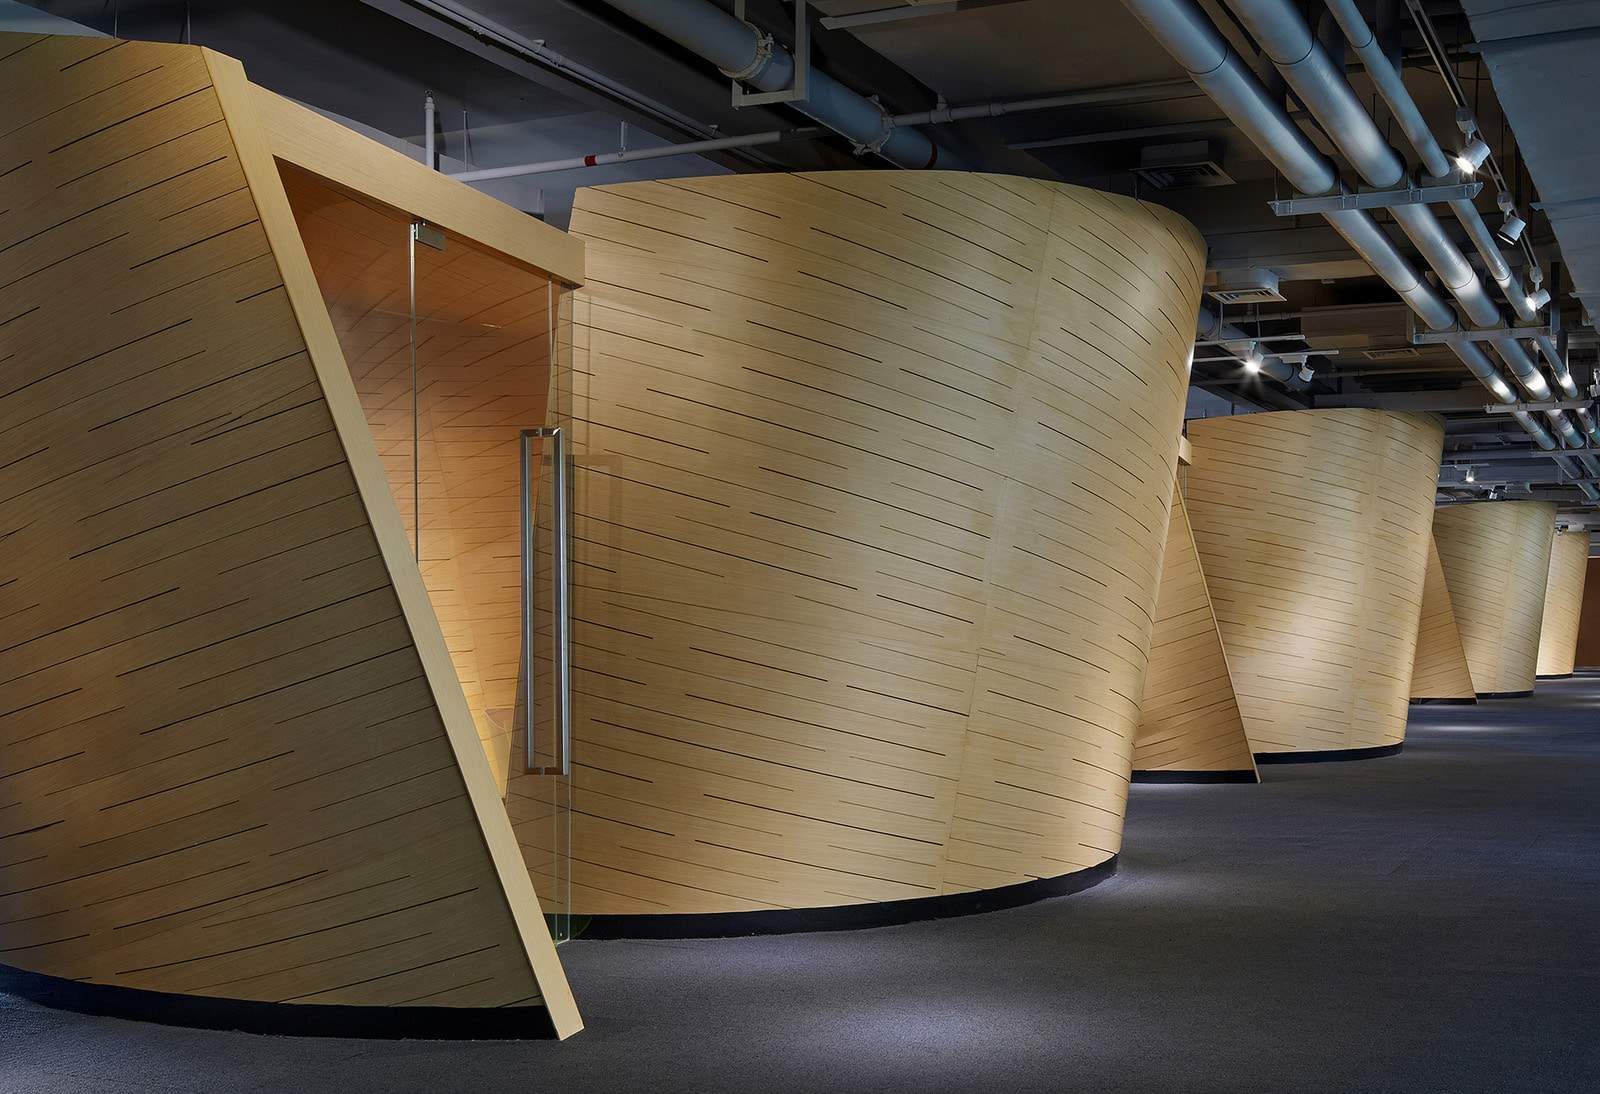 Curved wood framed office pods